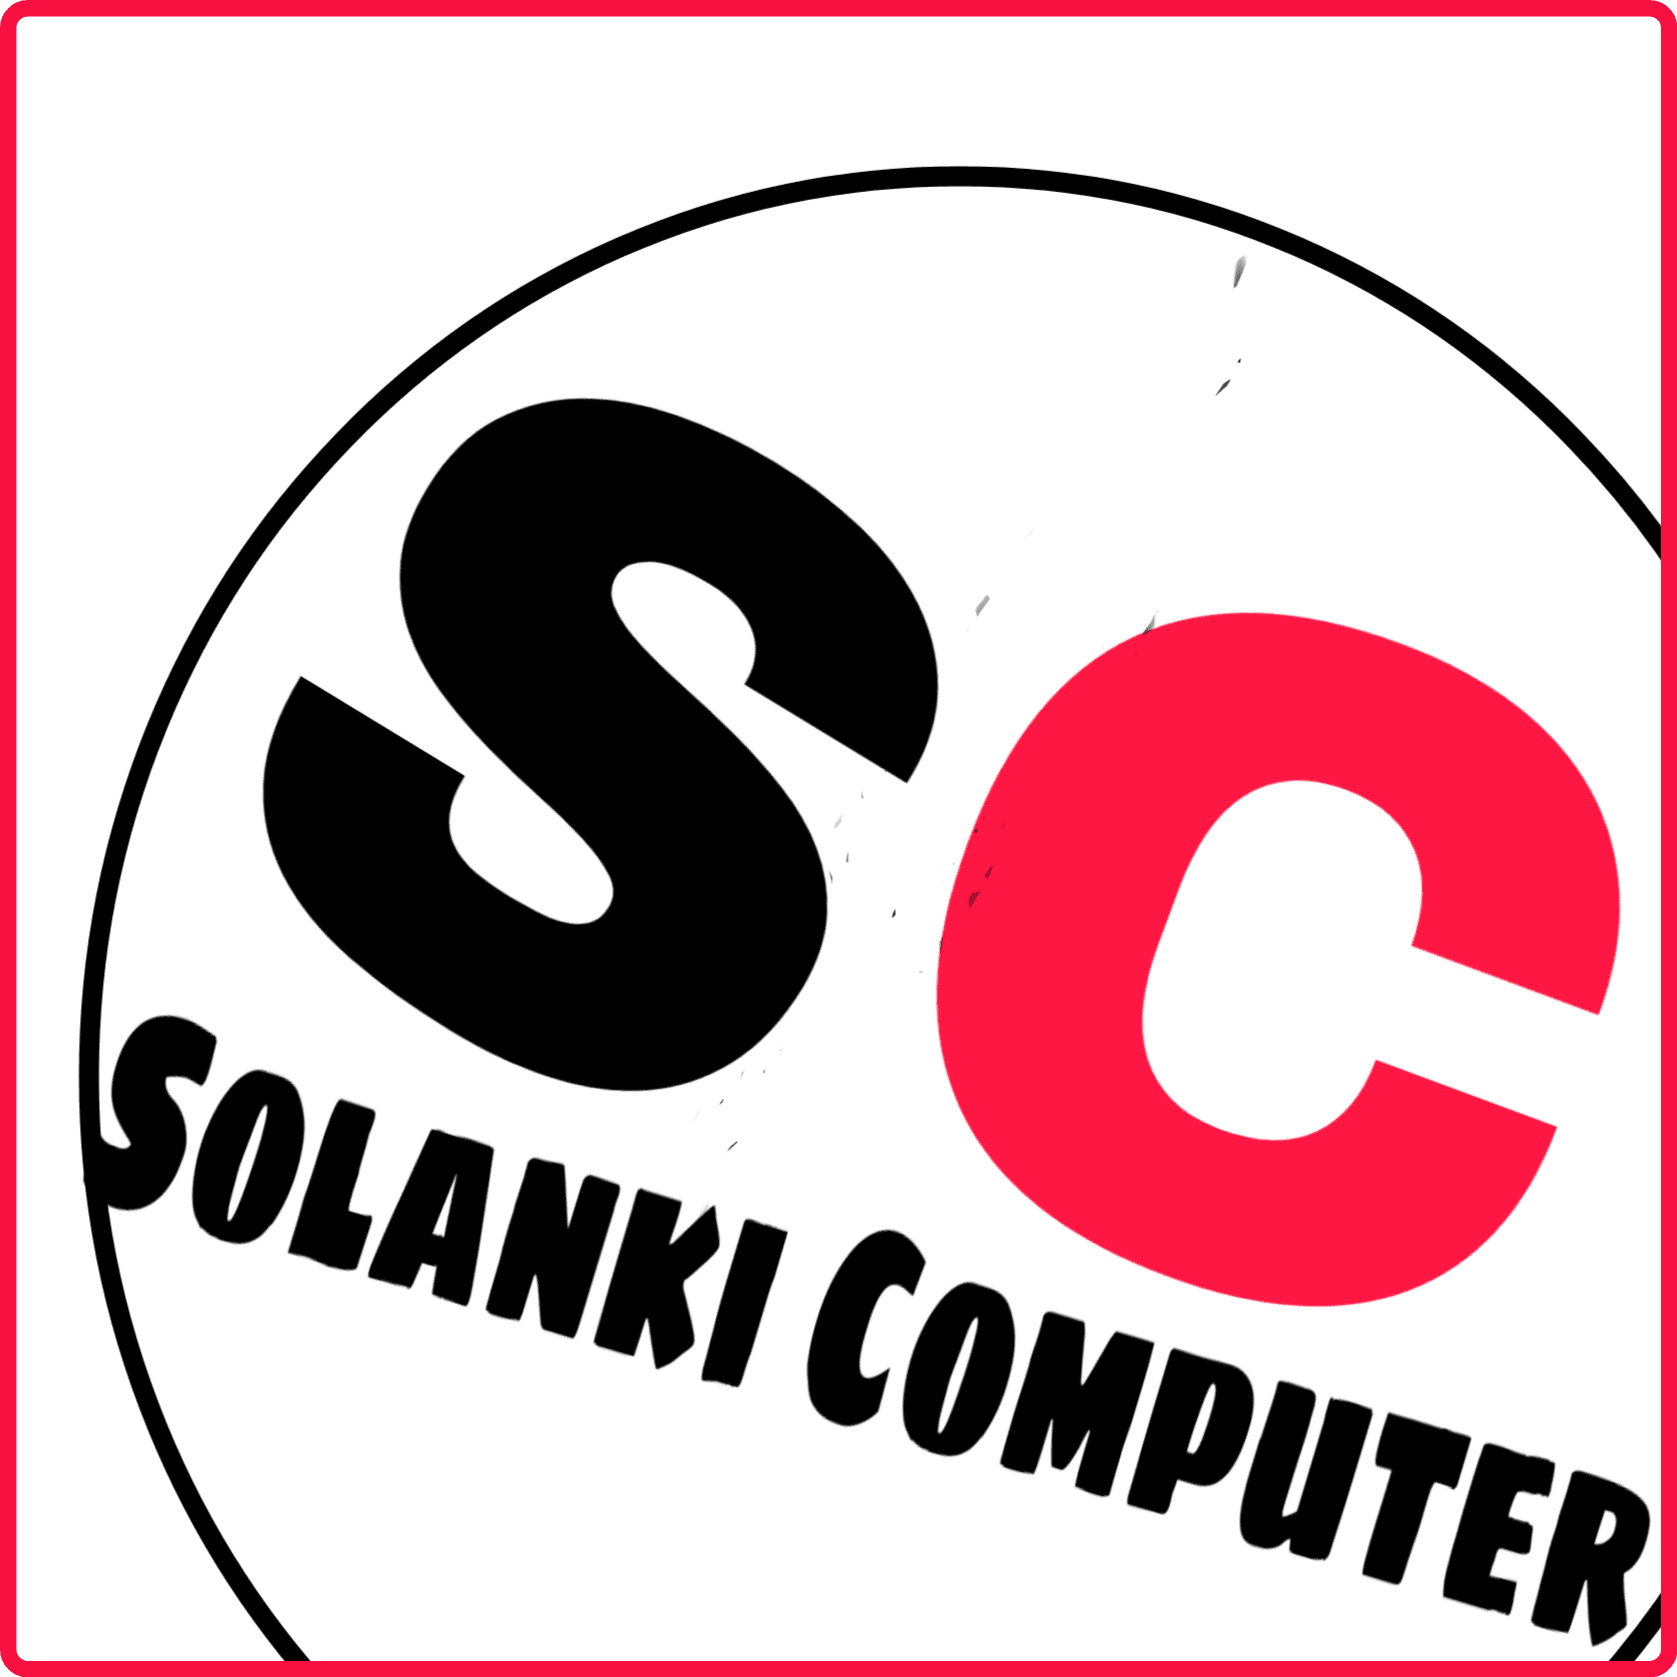 Solanki Computer